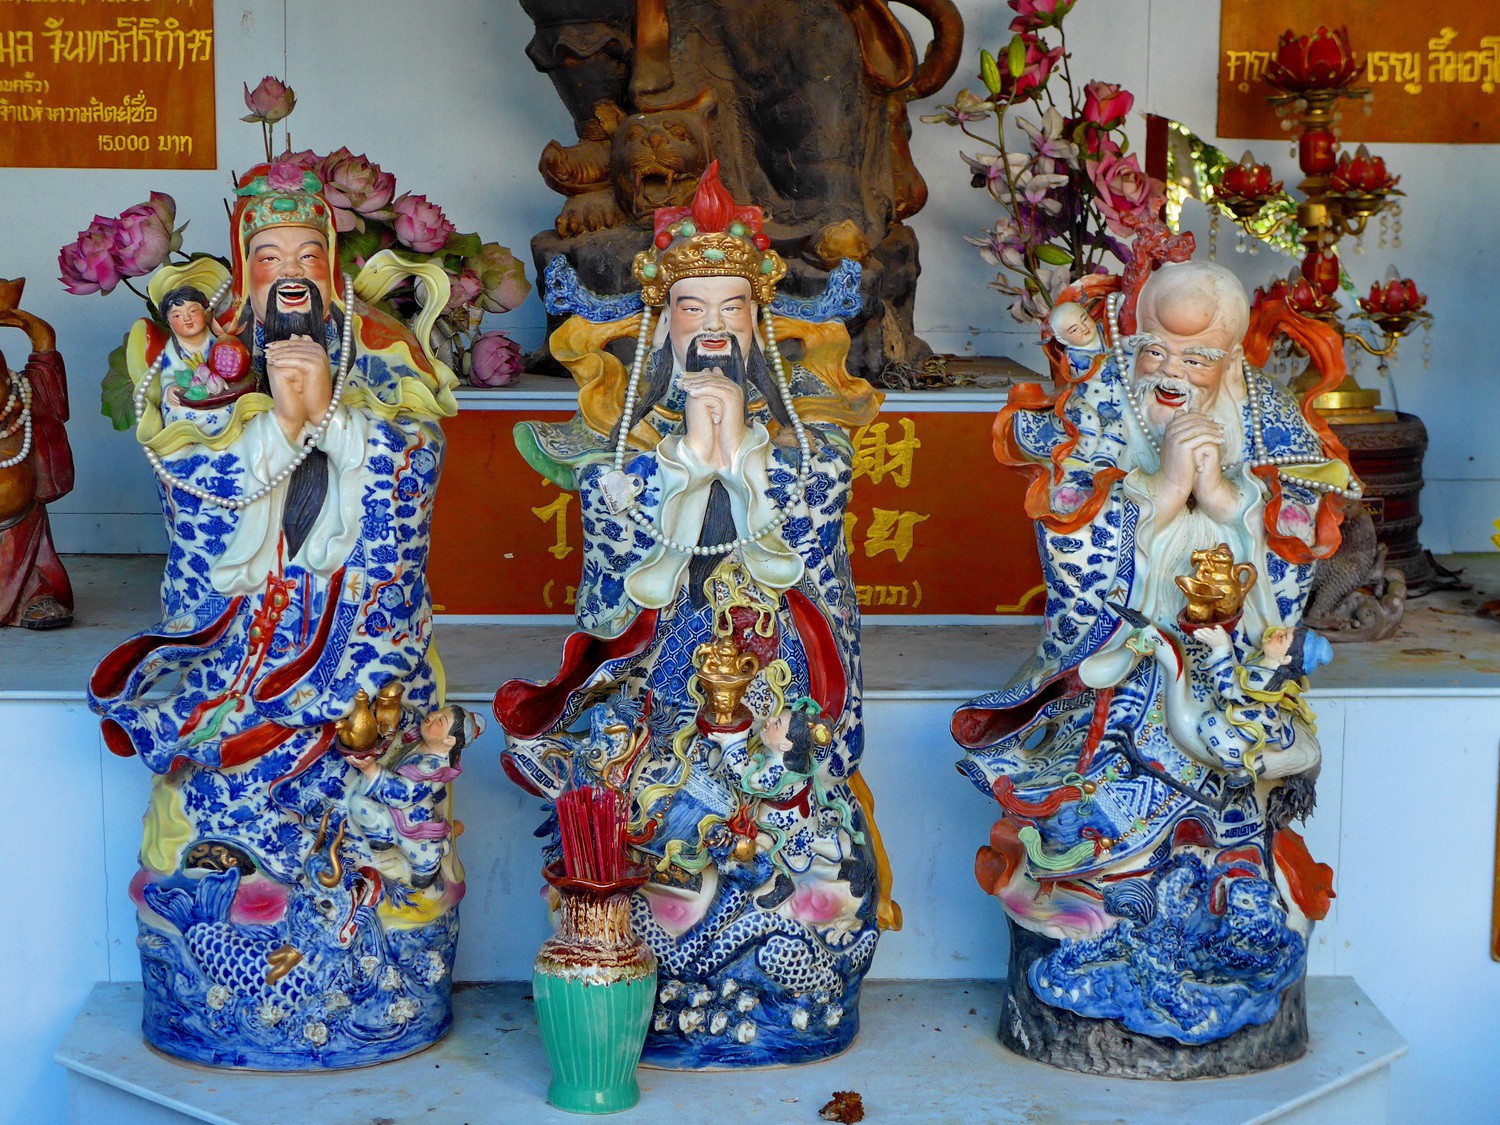 Three Chinese Princes?